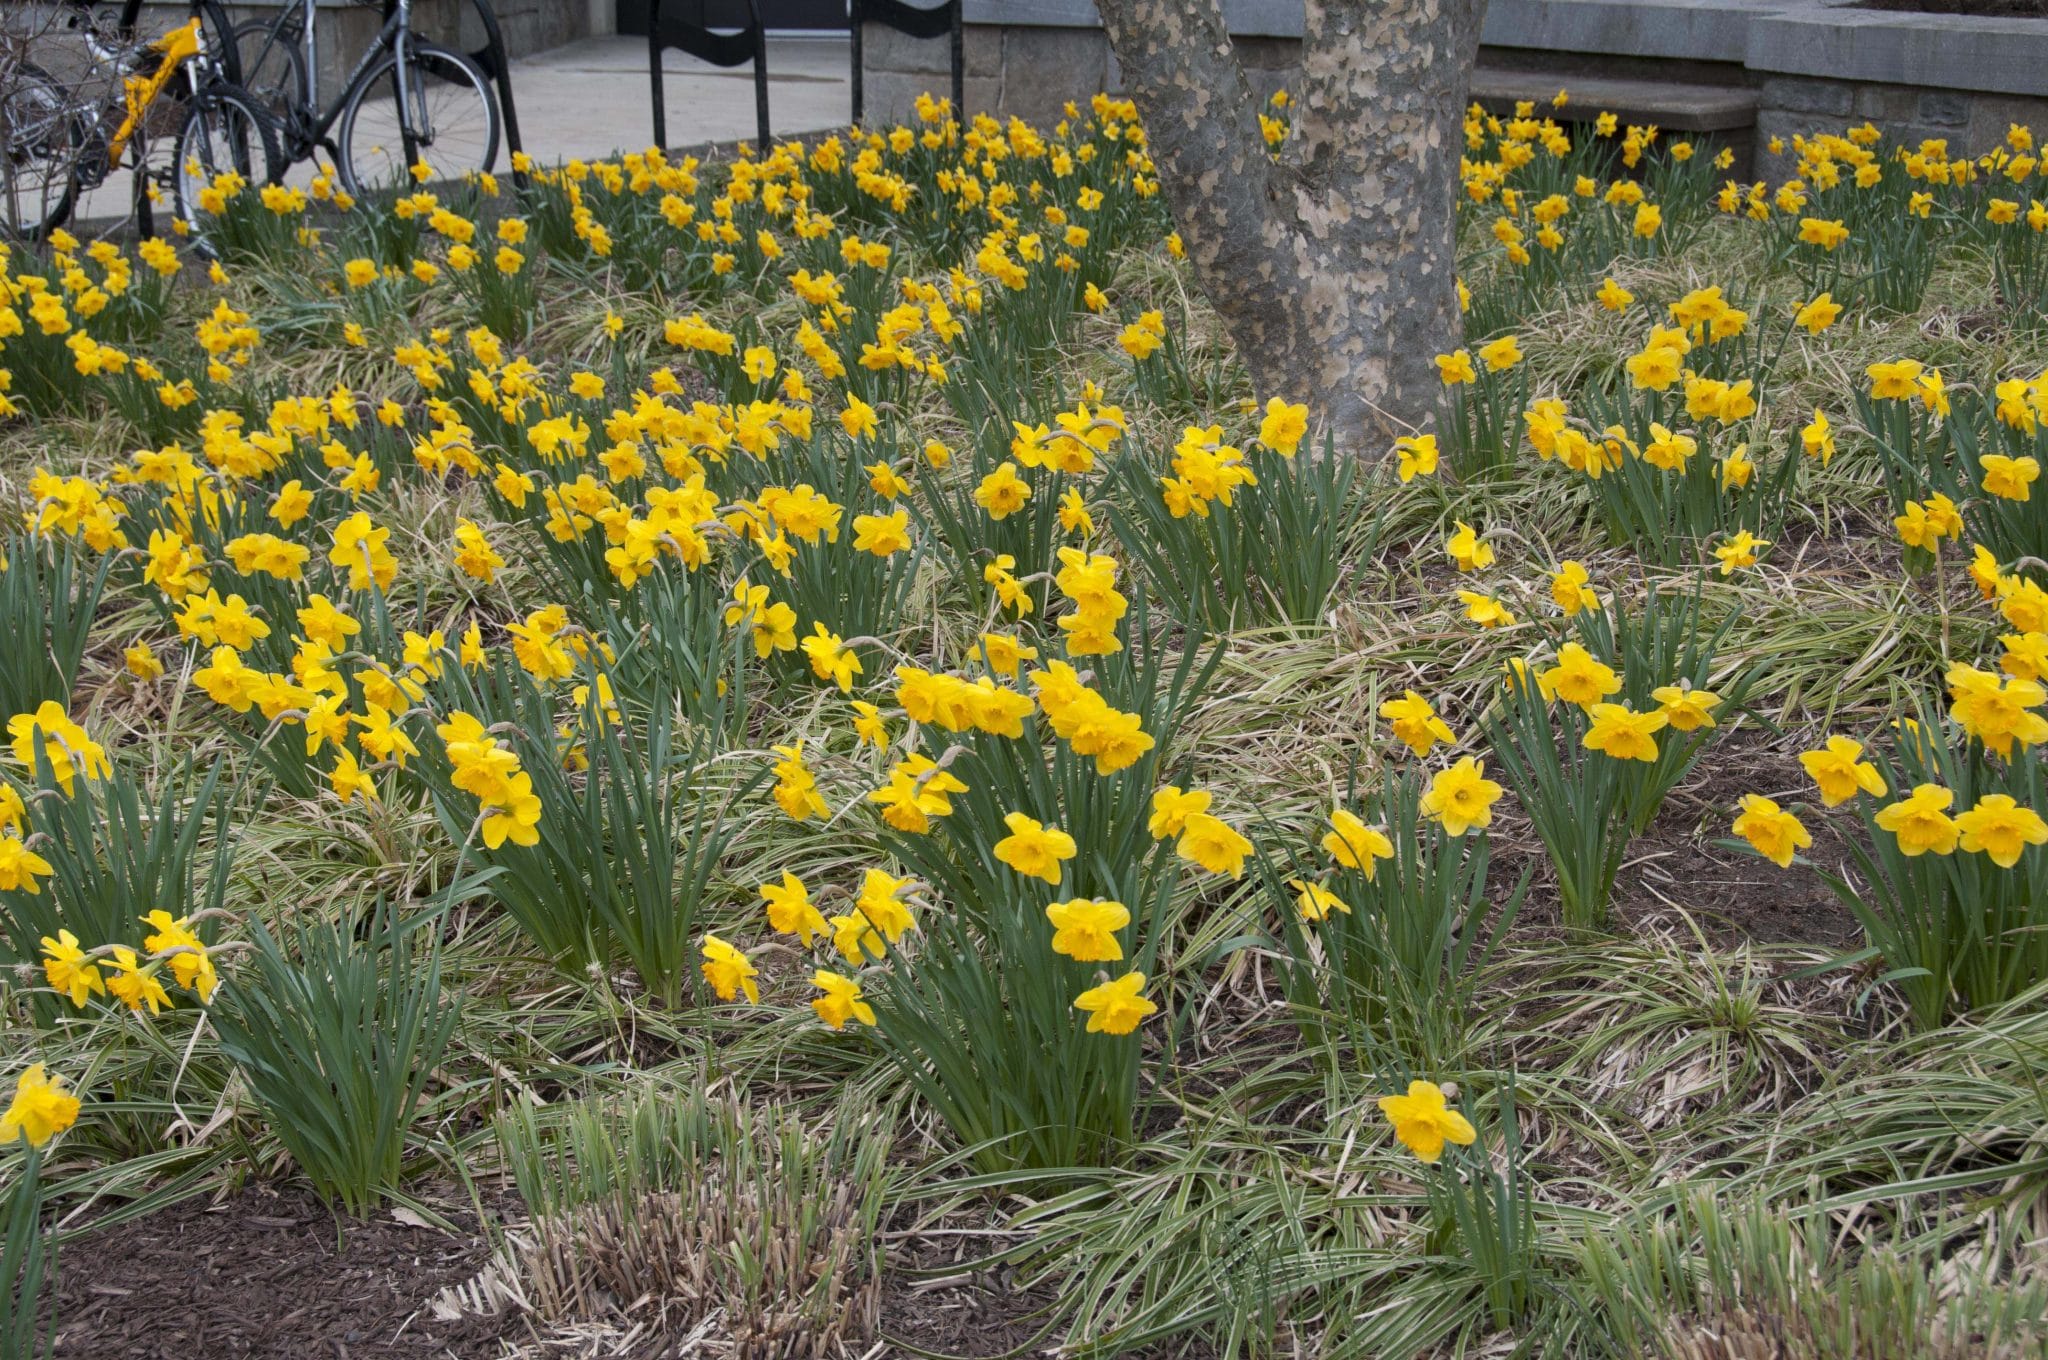 Daffodils with ornamental grasses